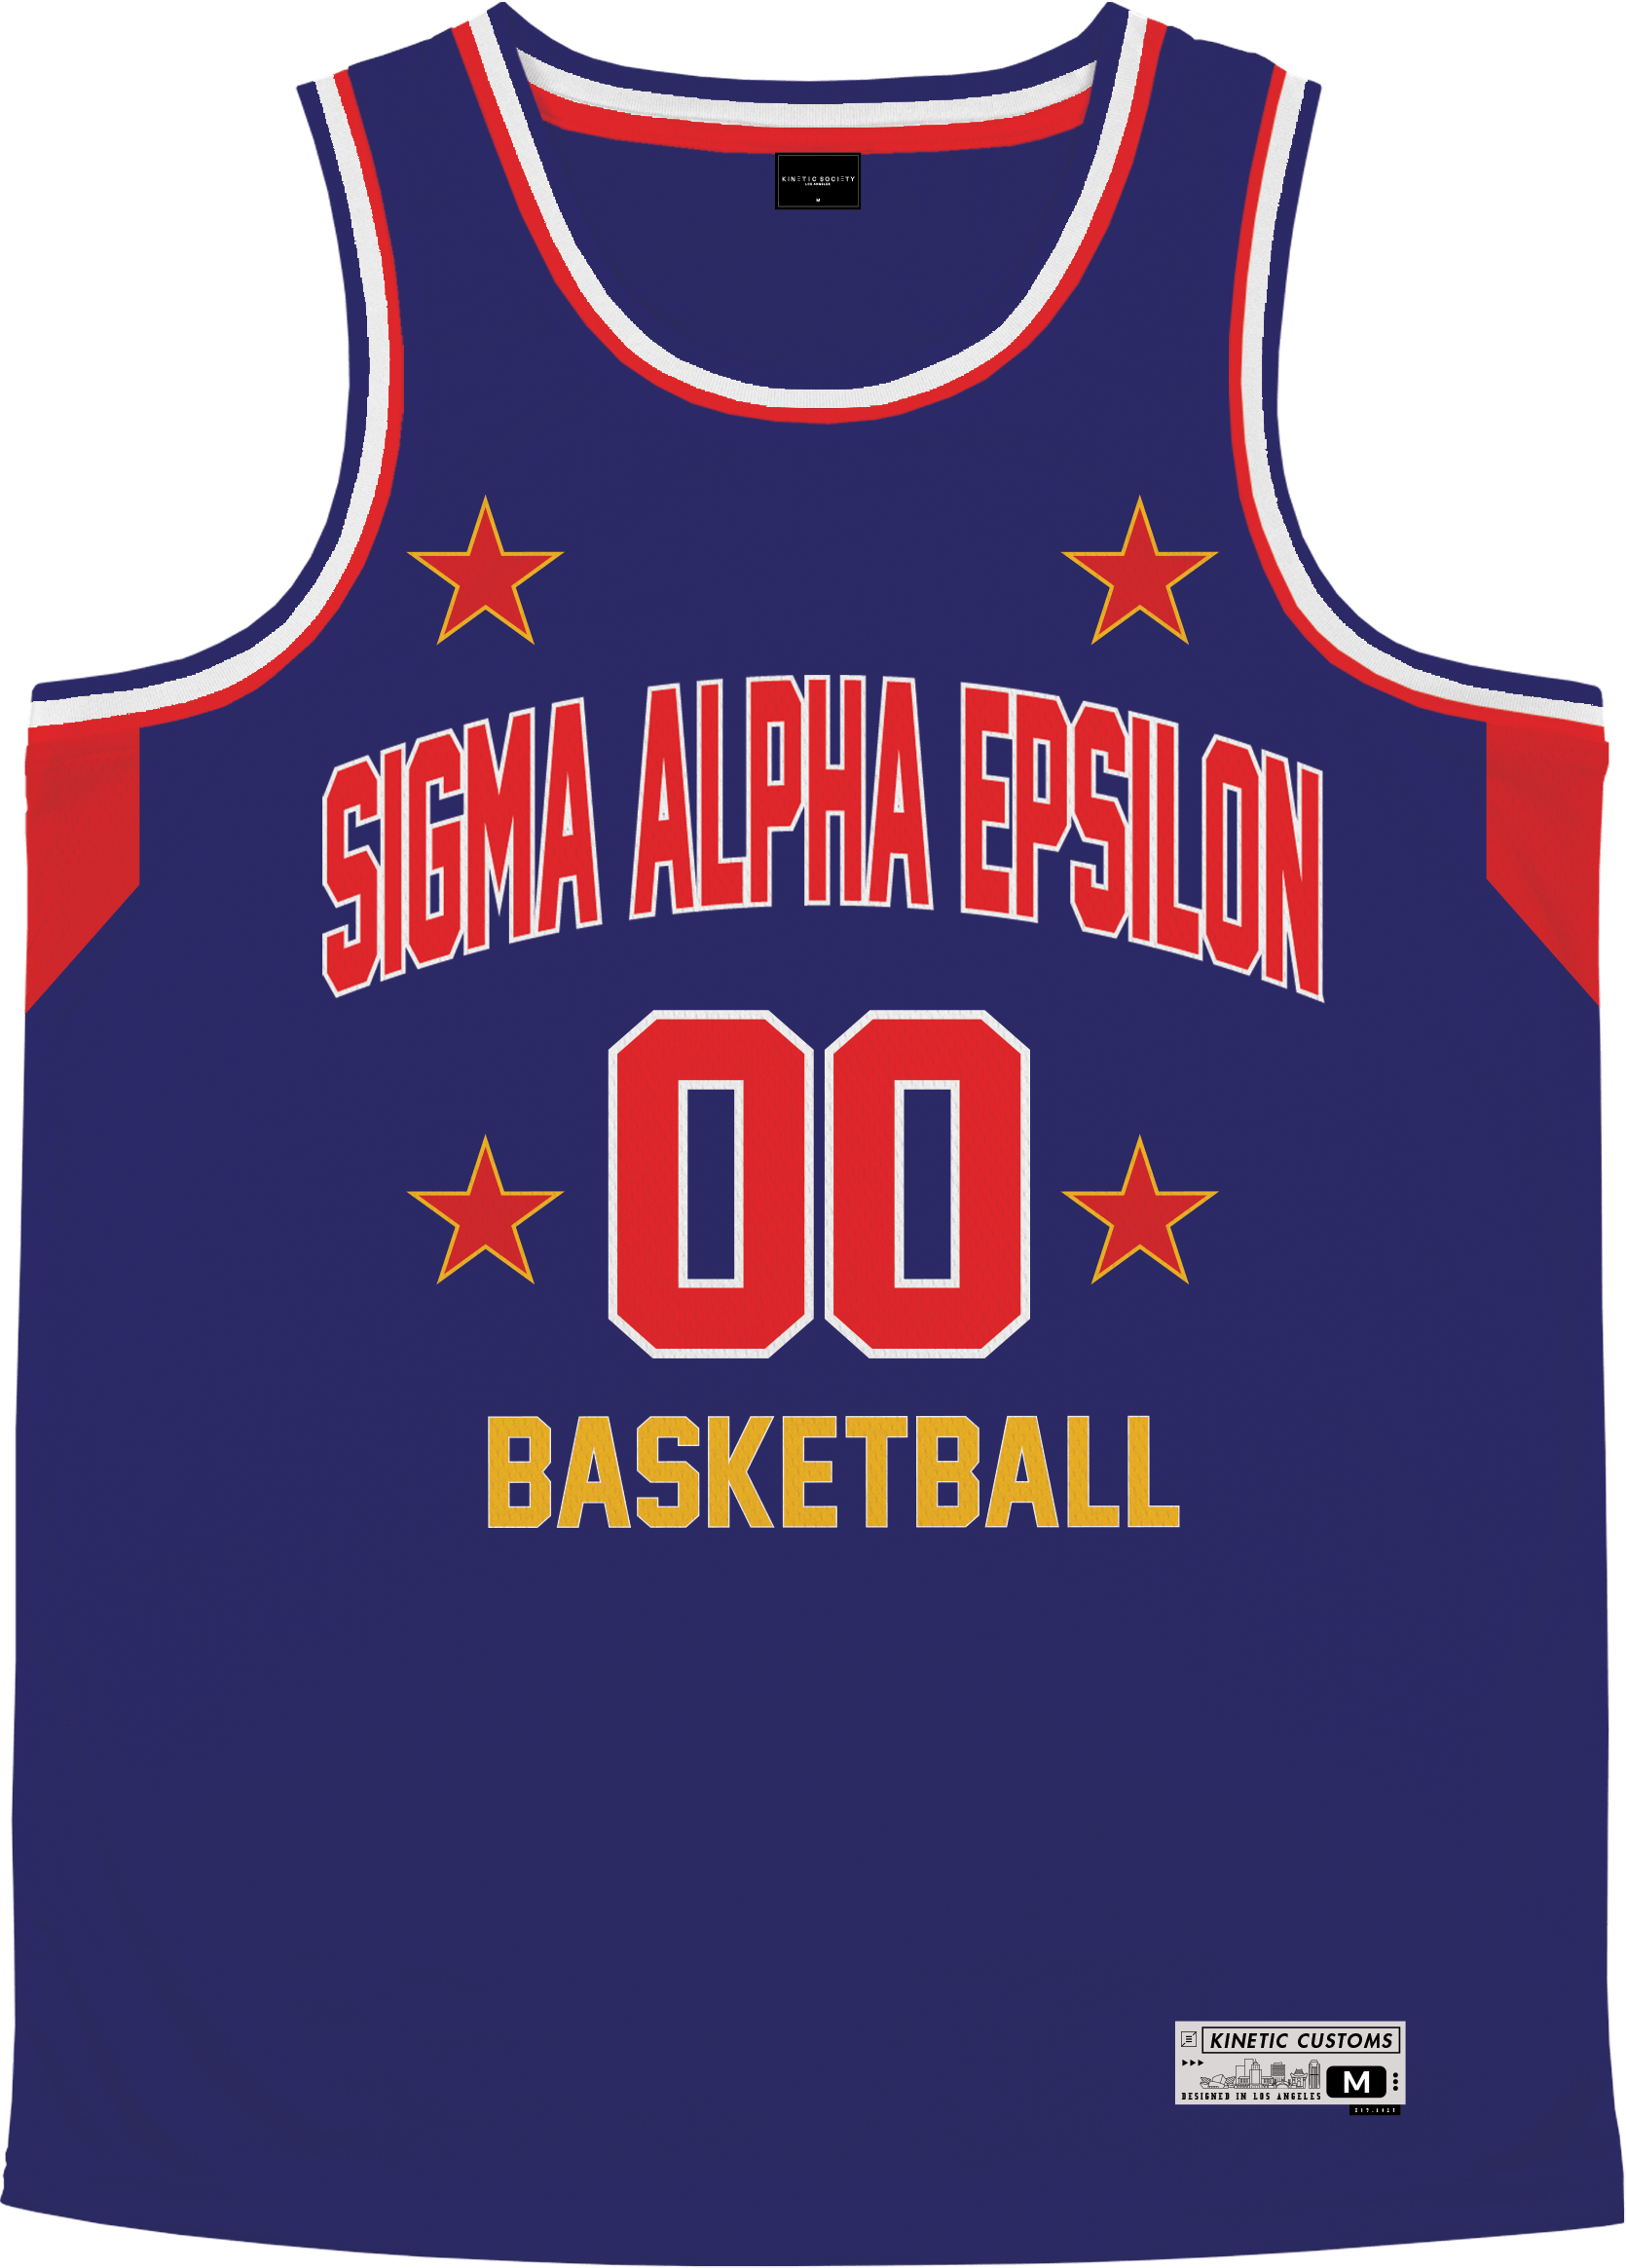 Sigma Alpha Epsilon - Retro Ballers Basketball Jersey - Kinetic Society